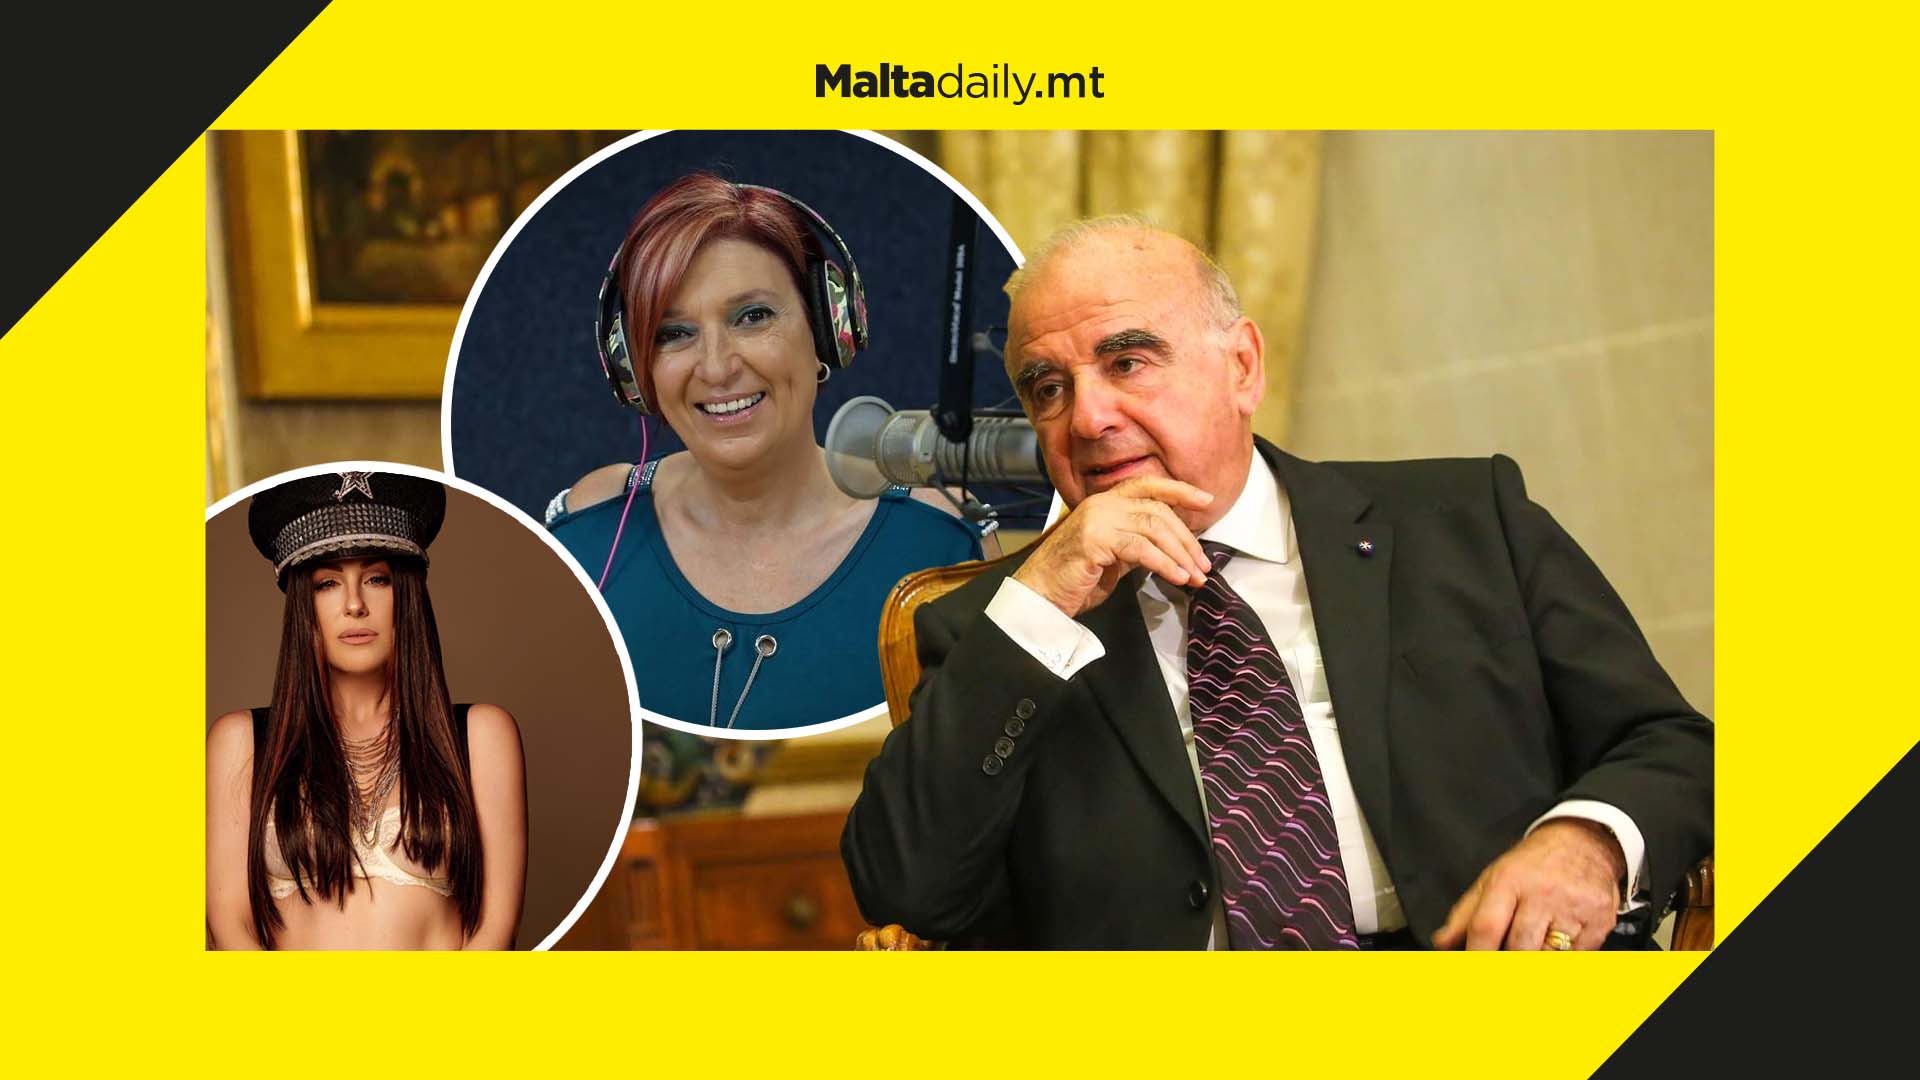 5 ALTERNATIVE picks for Malta's next president